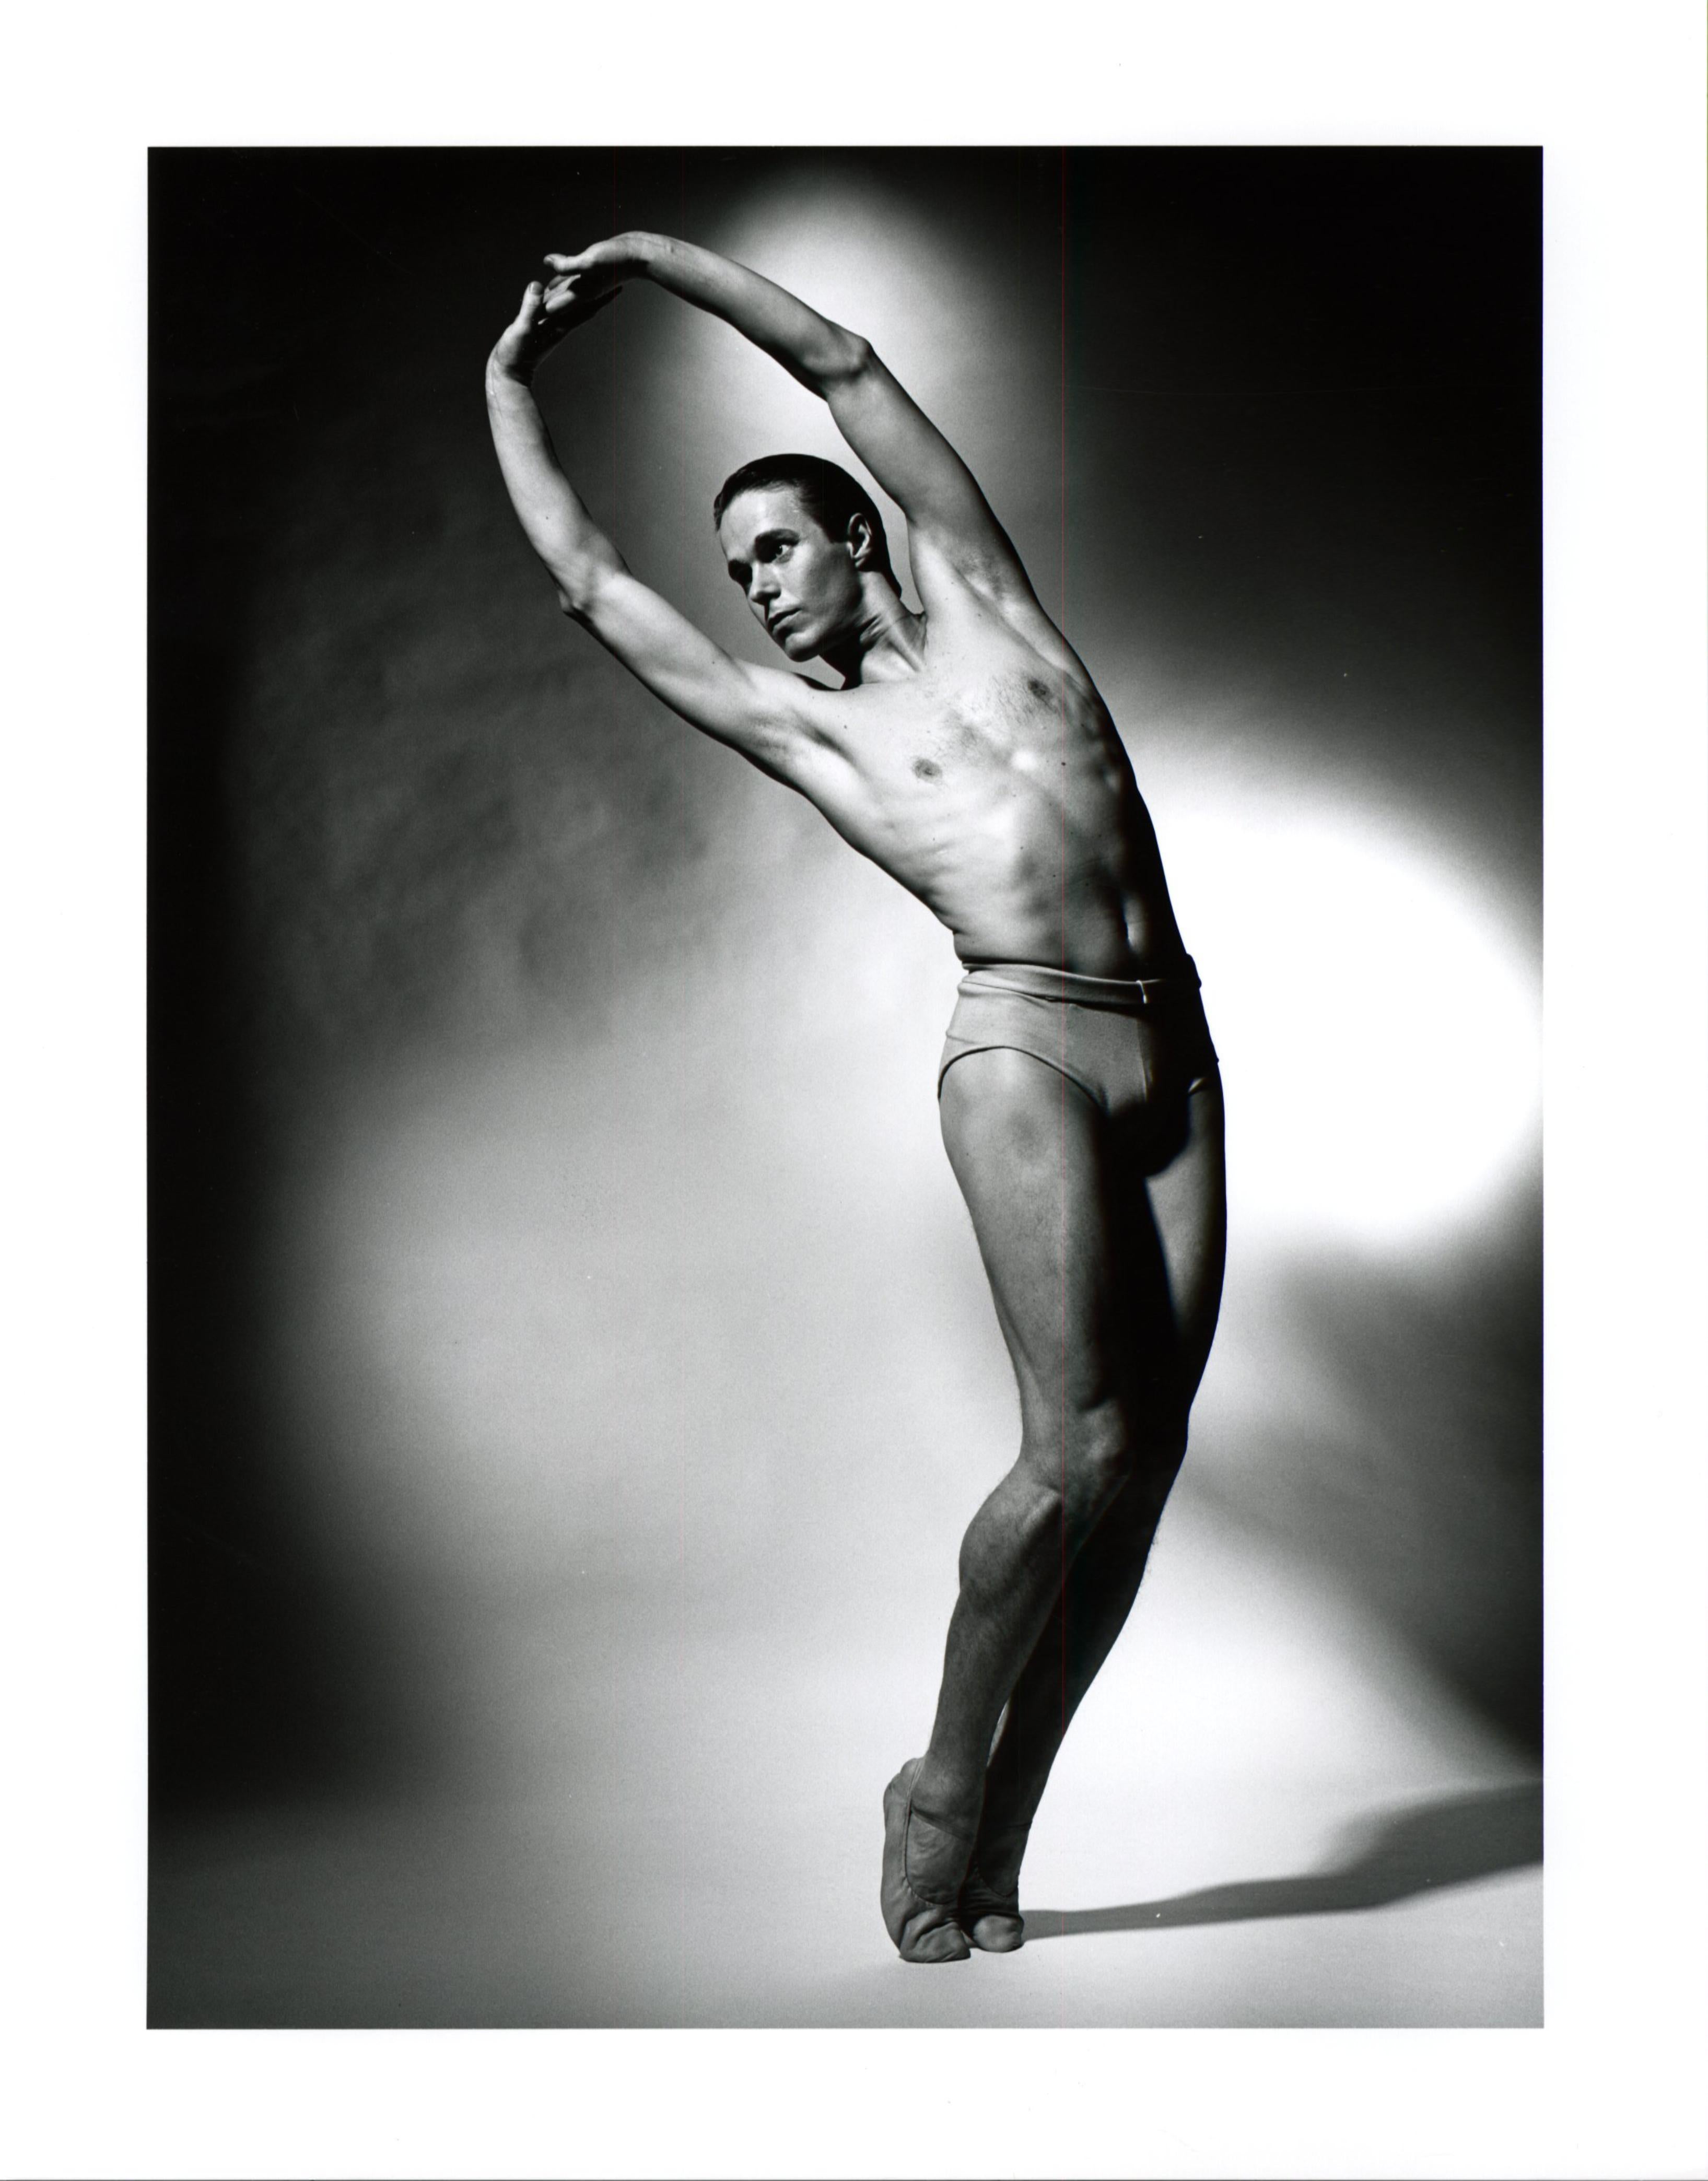 San Francisco Ballet dancer Mikko Nissinen, nude study for Dance magazine cover